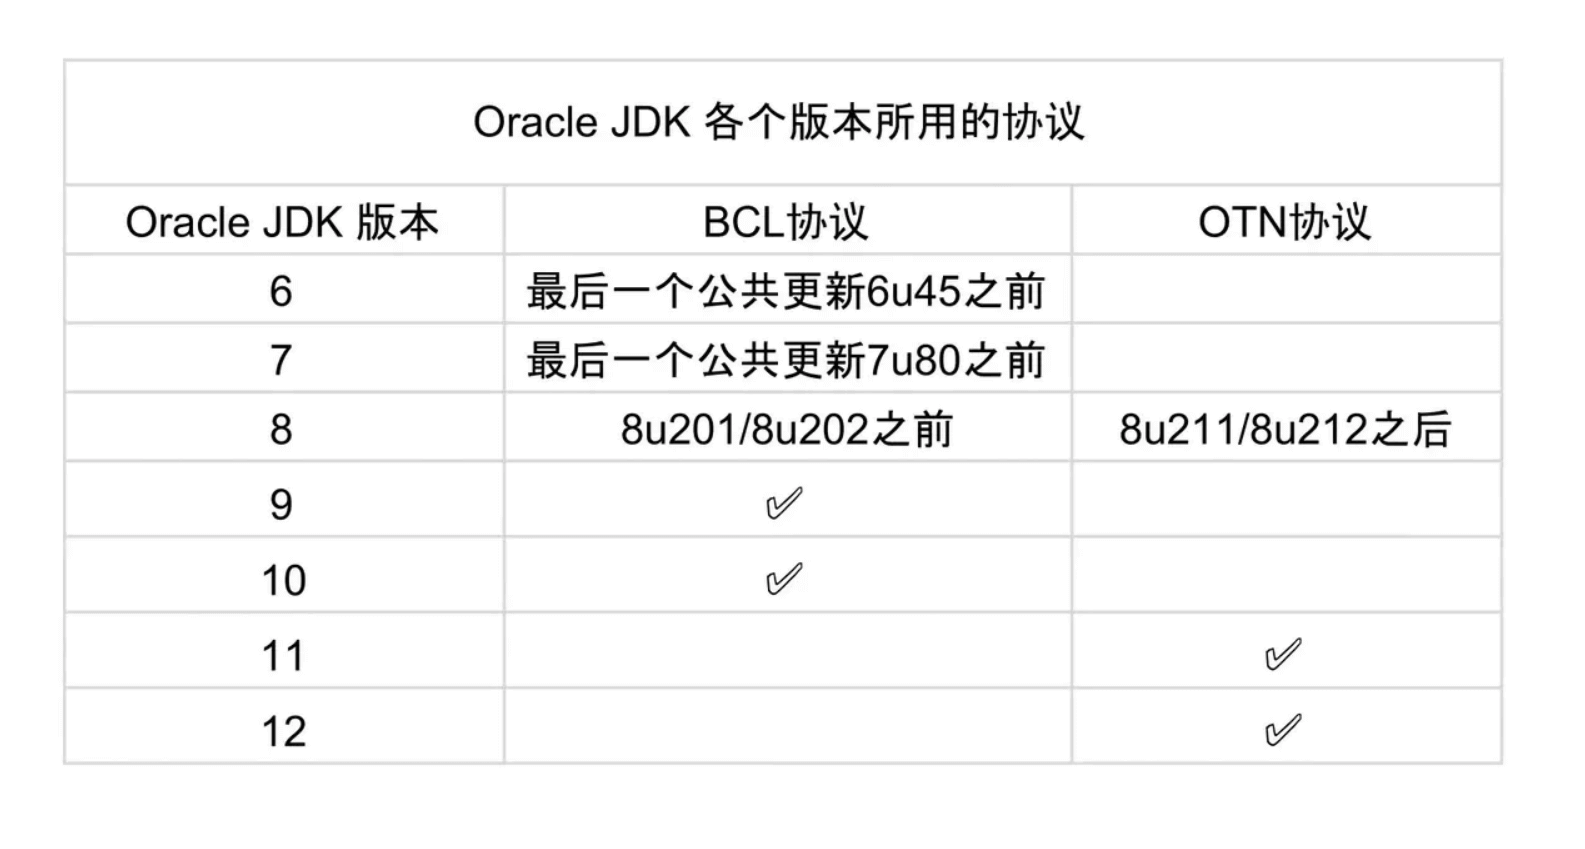 Oracle JDK 和 OpenJDK 有什么区别？